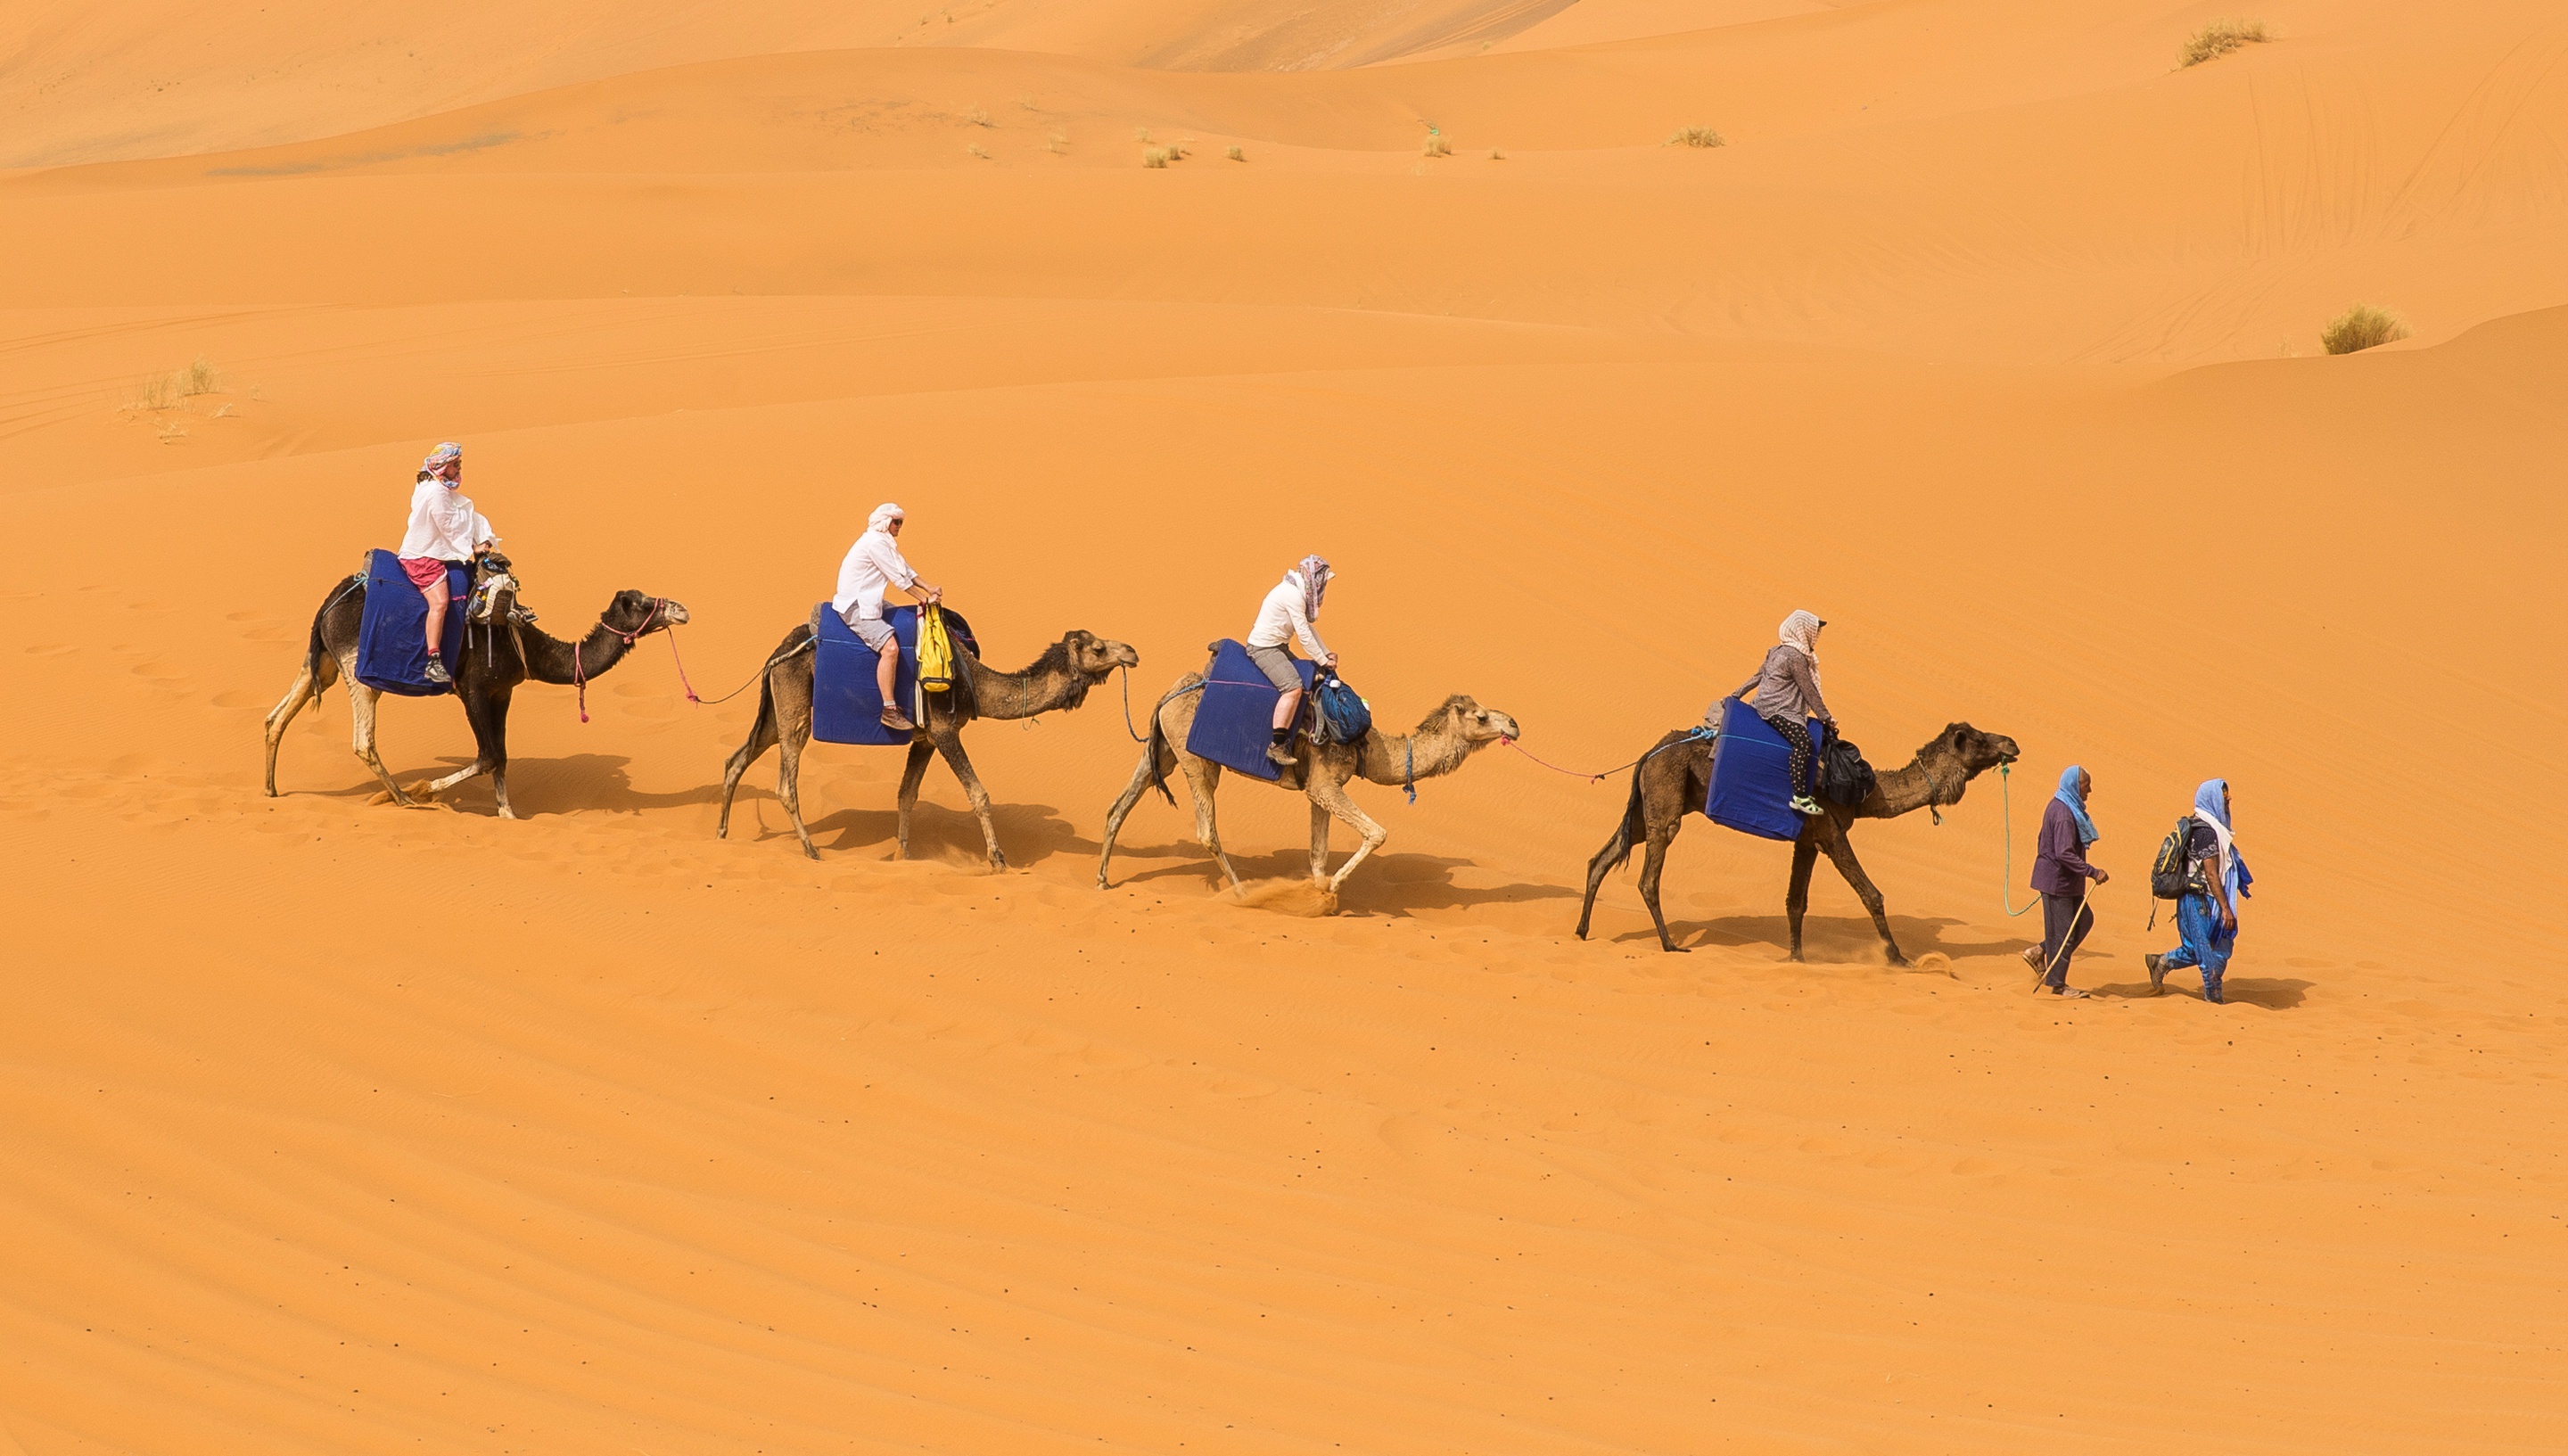 Караван картинка. Мехари верблюд. Бедуин на верблюде. Караван с верблюдами в пустыне. Бедуин с верблюдом в пустыне.